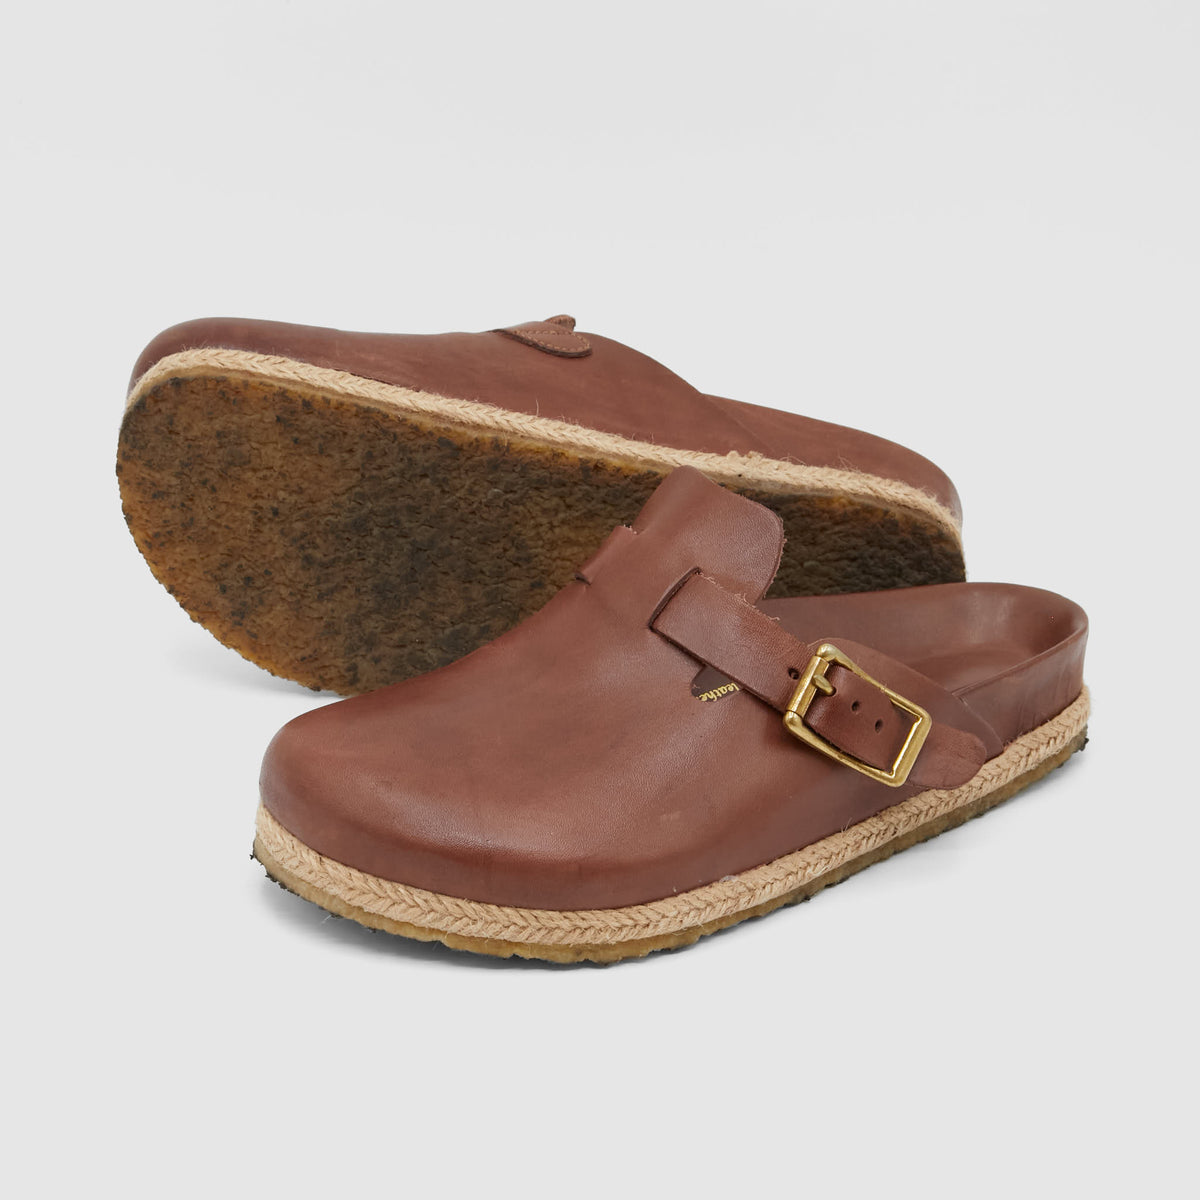 Yuketen Comfort Leather Clogs